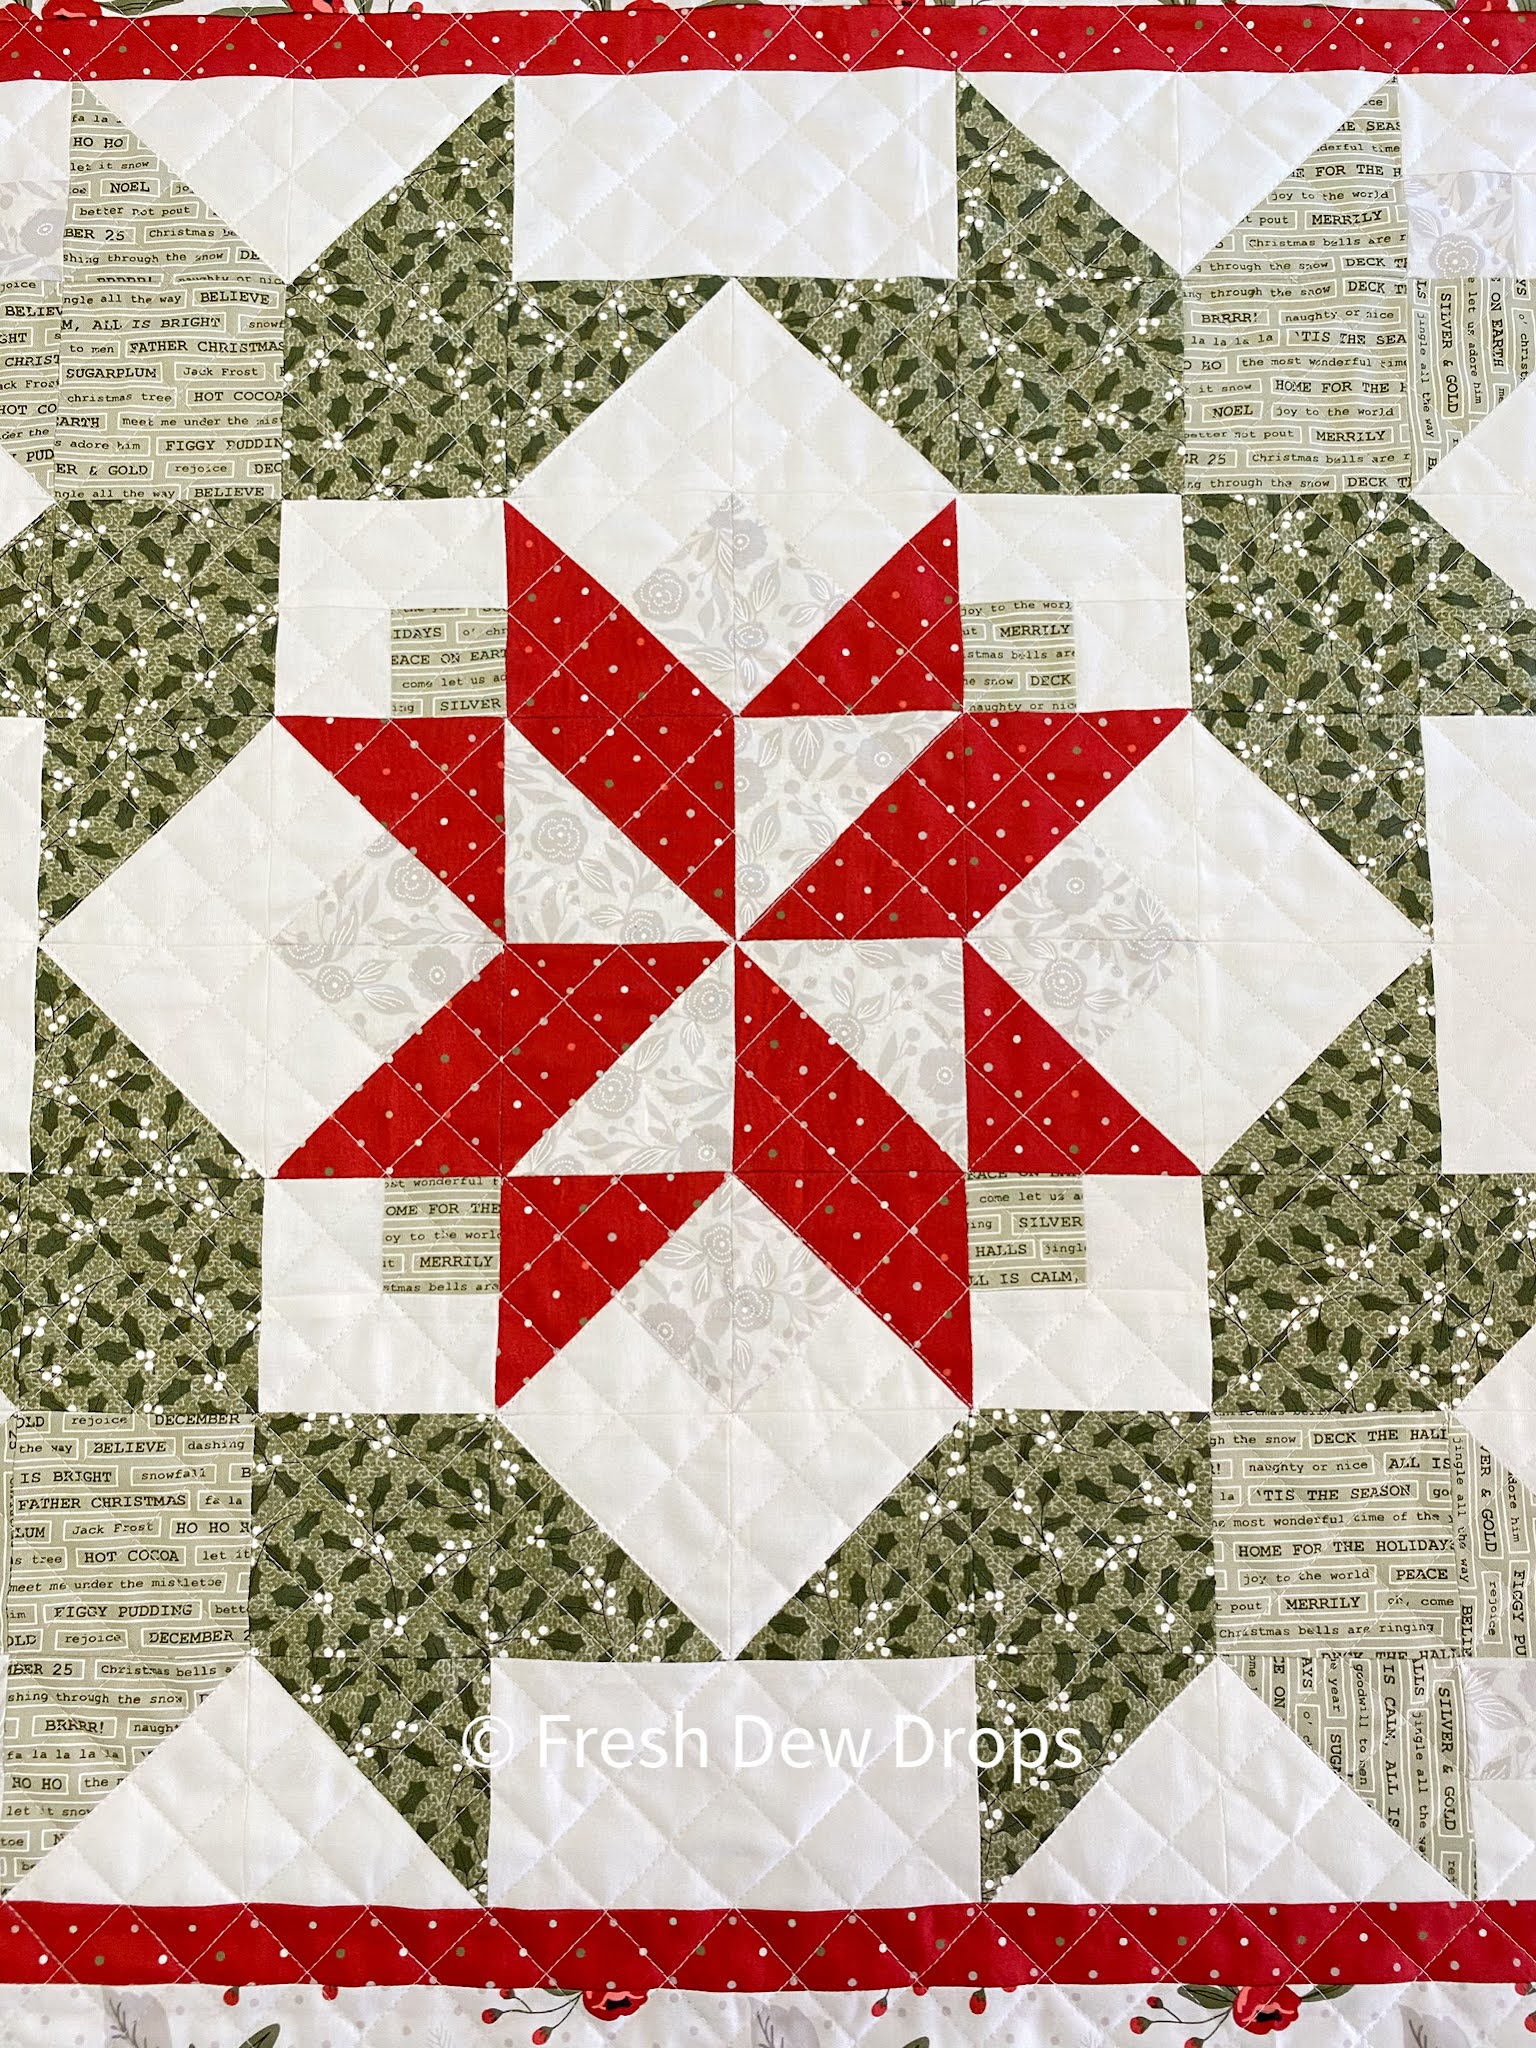 Blossom Quilt Pattern by Missouri Star